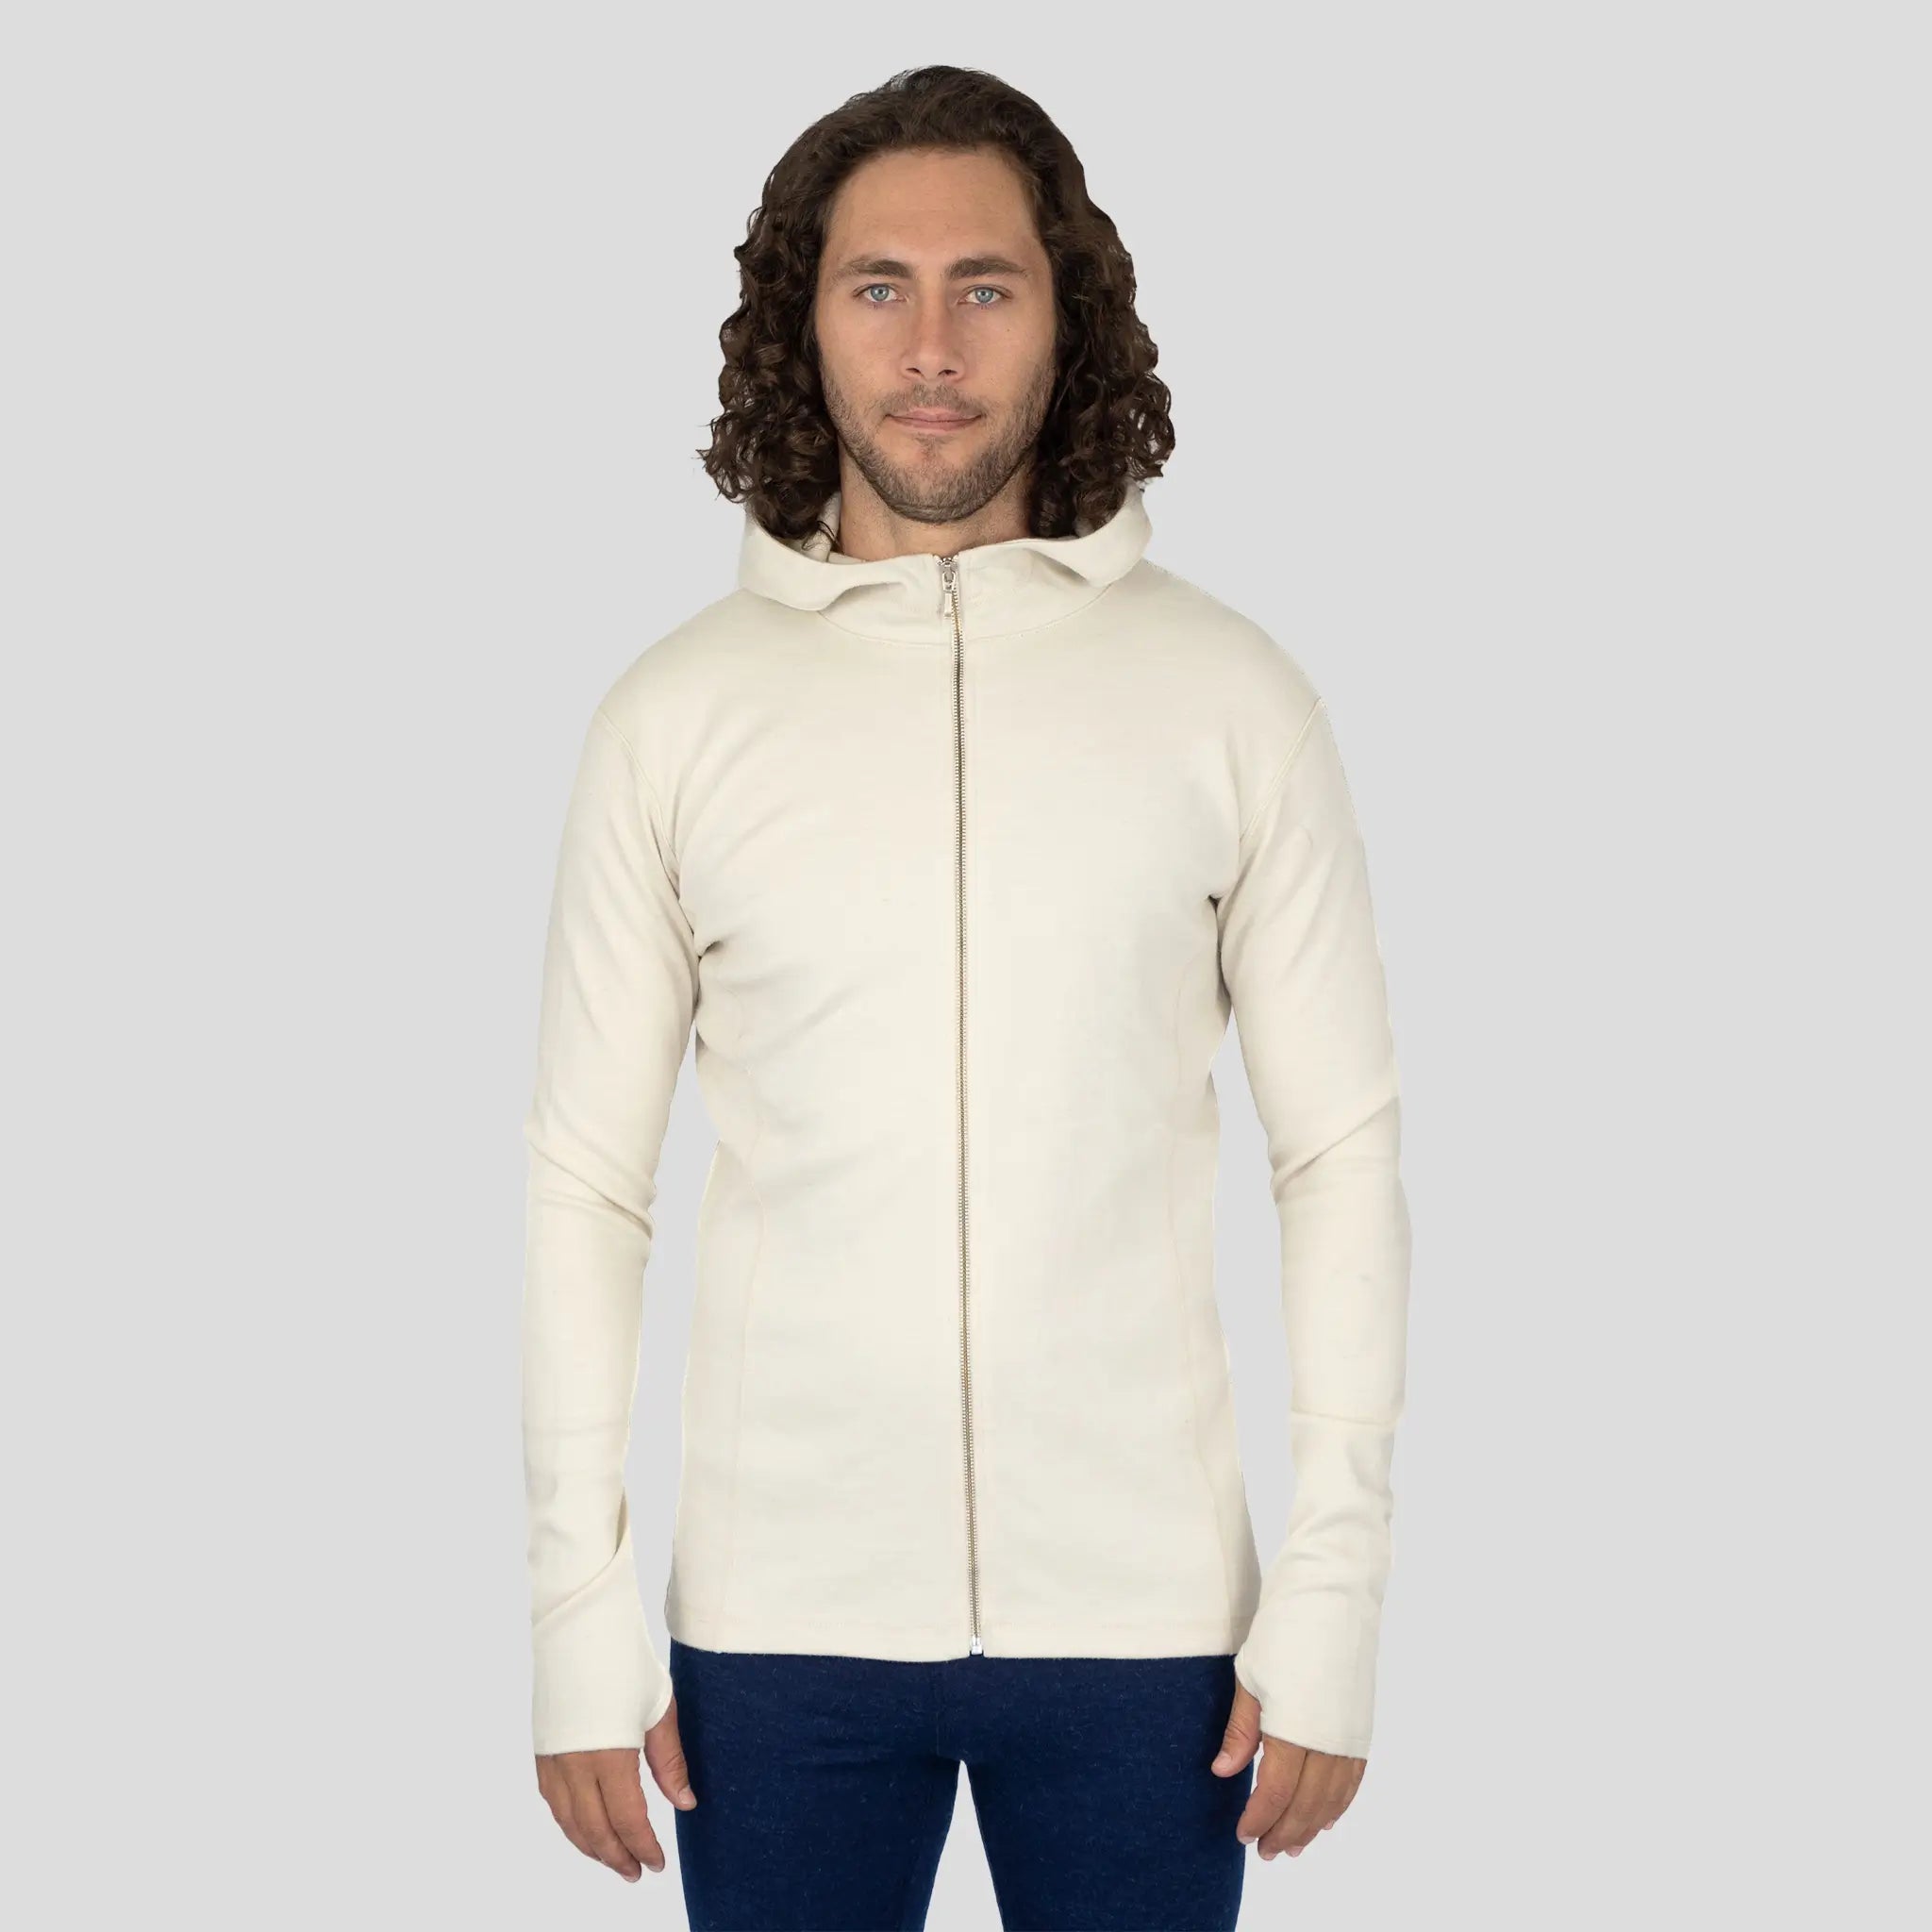 alpaca wool jacket hoodie midweight color natural white